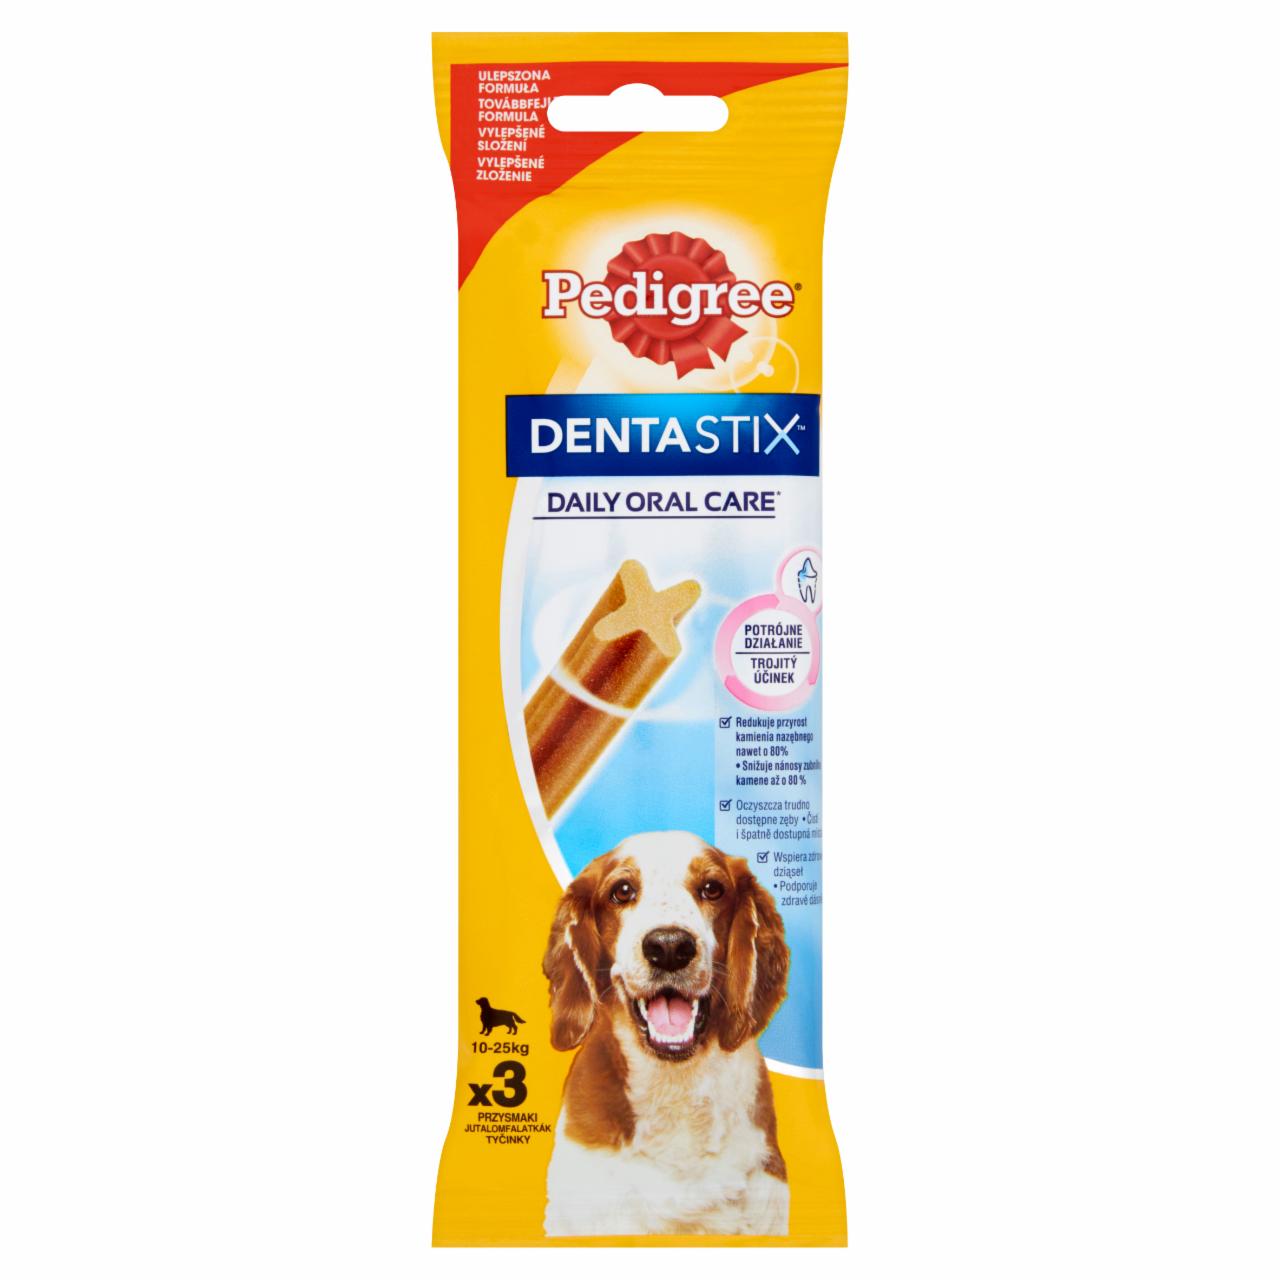 Photo - Pedigree DentaStix Dog Treat for 10-25 kg Dogs 3 pcs 77 g